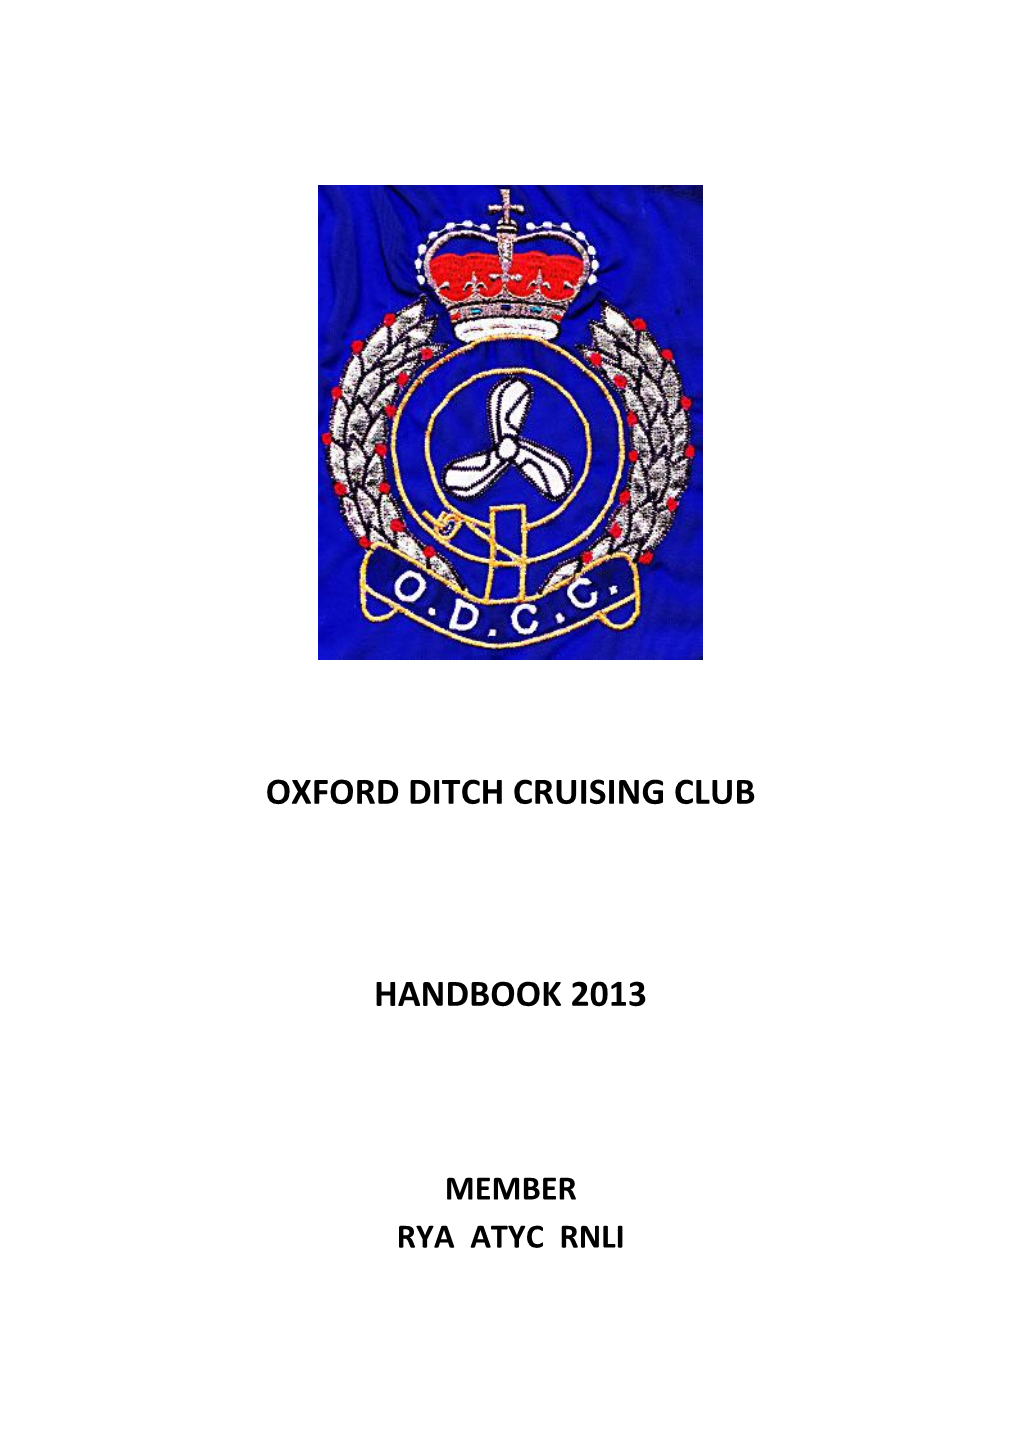 Oxford Ditch Cruising Club Handbook 2013